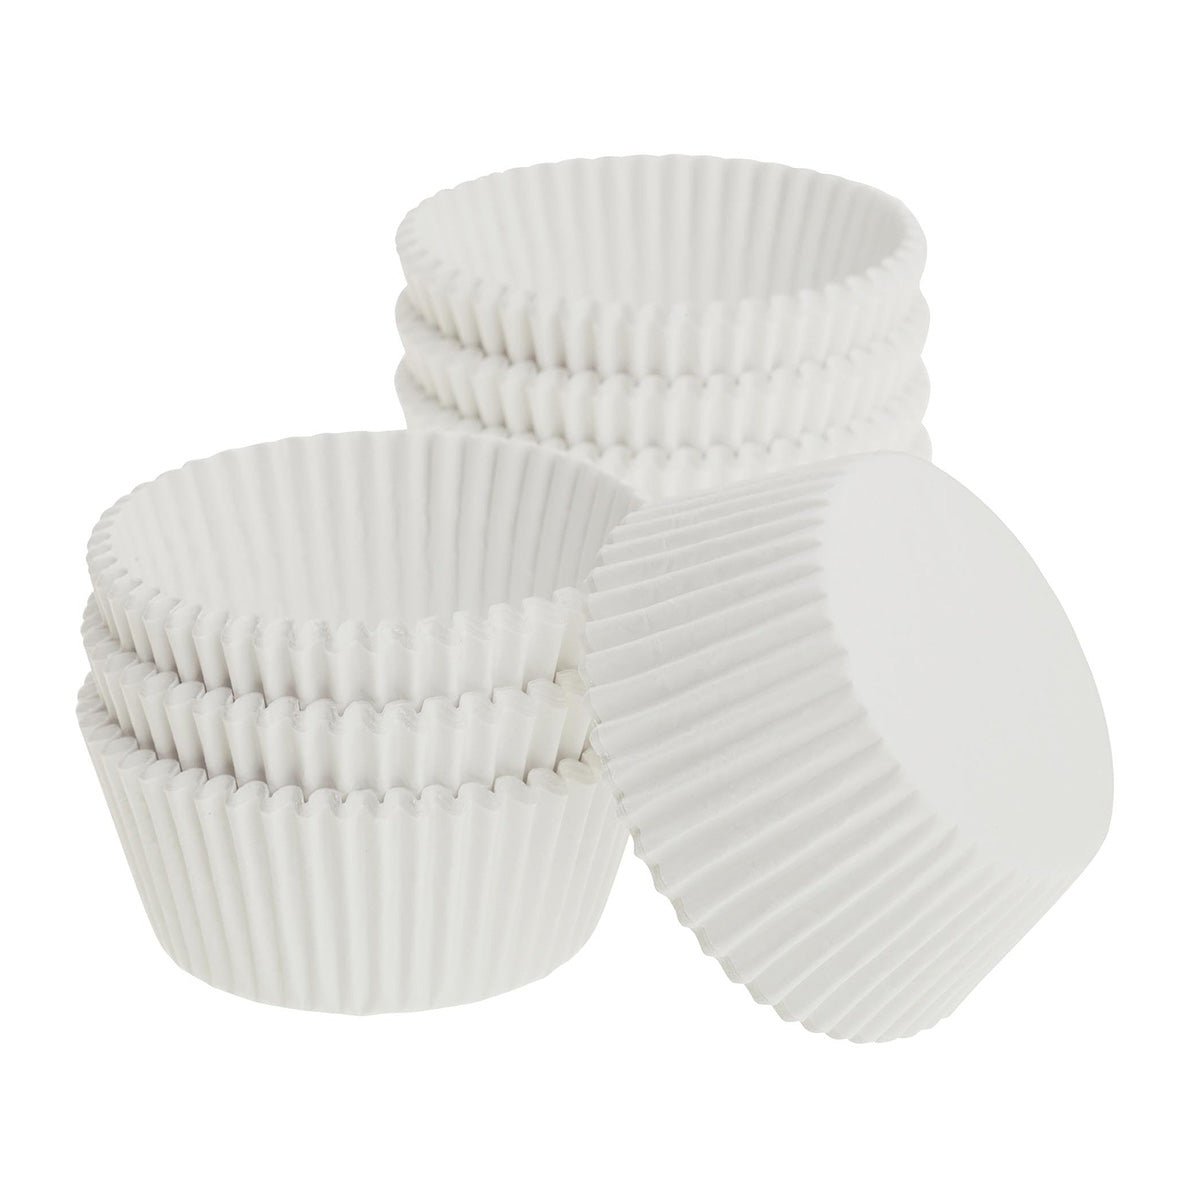 Ateco White Dry Wax Paper Baking Cups - 1" Diameter